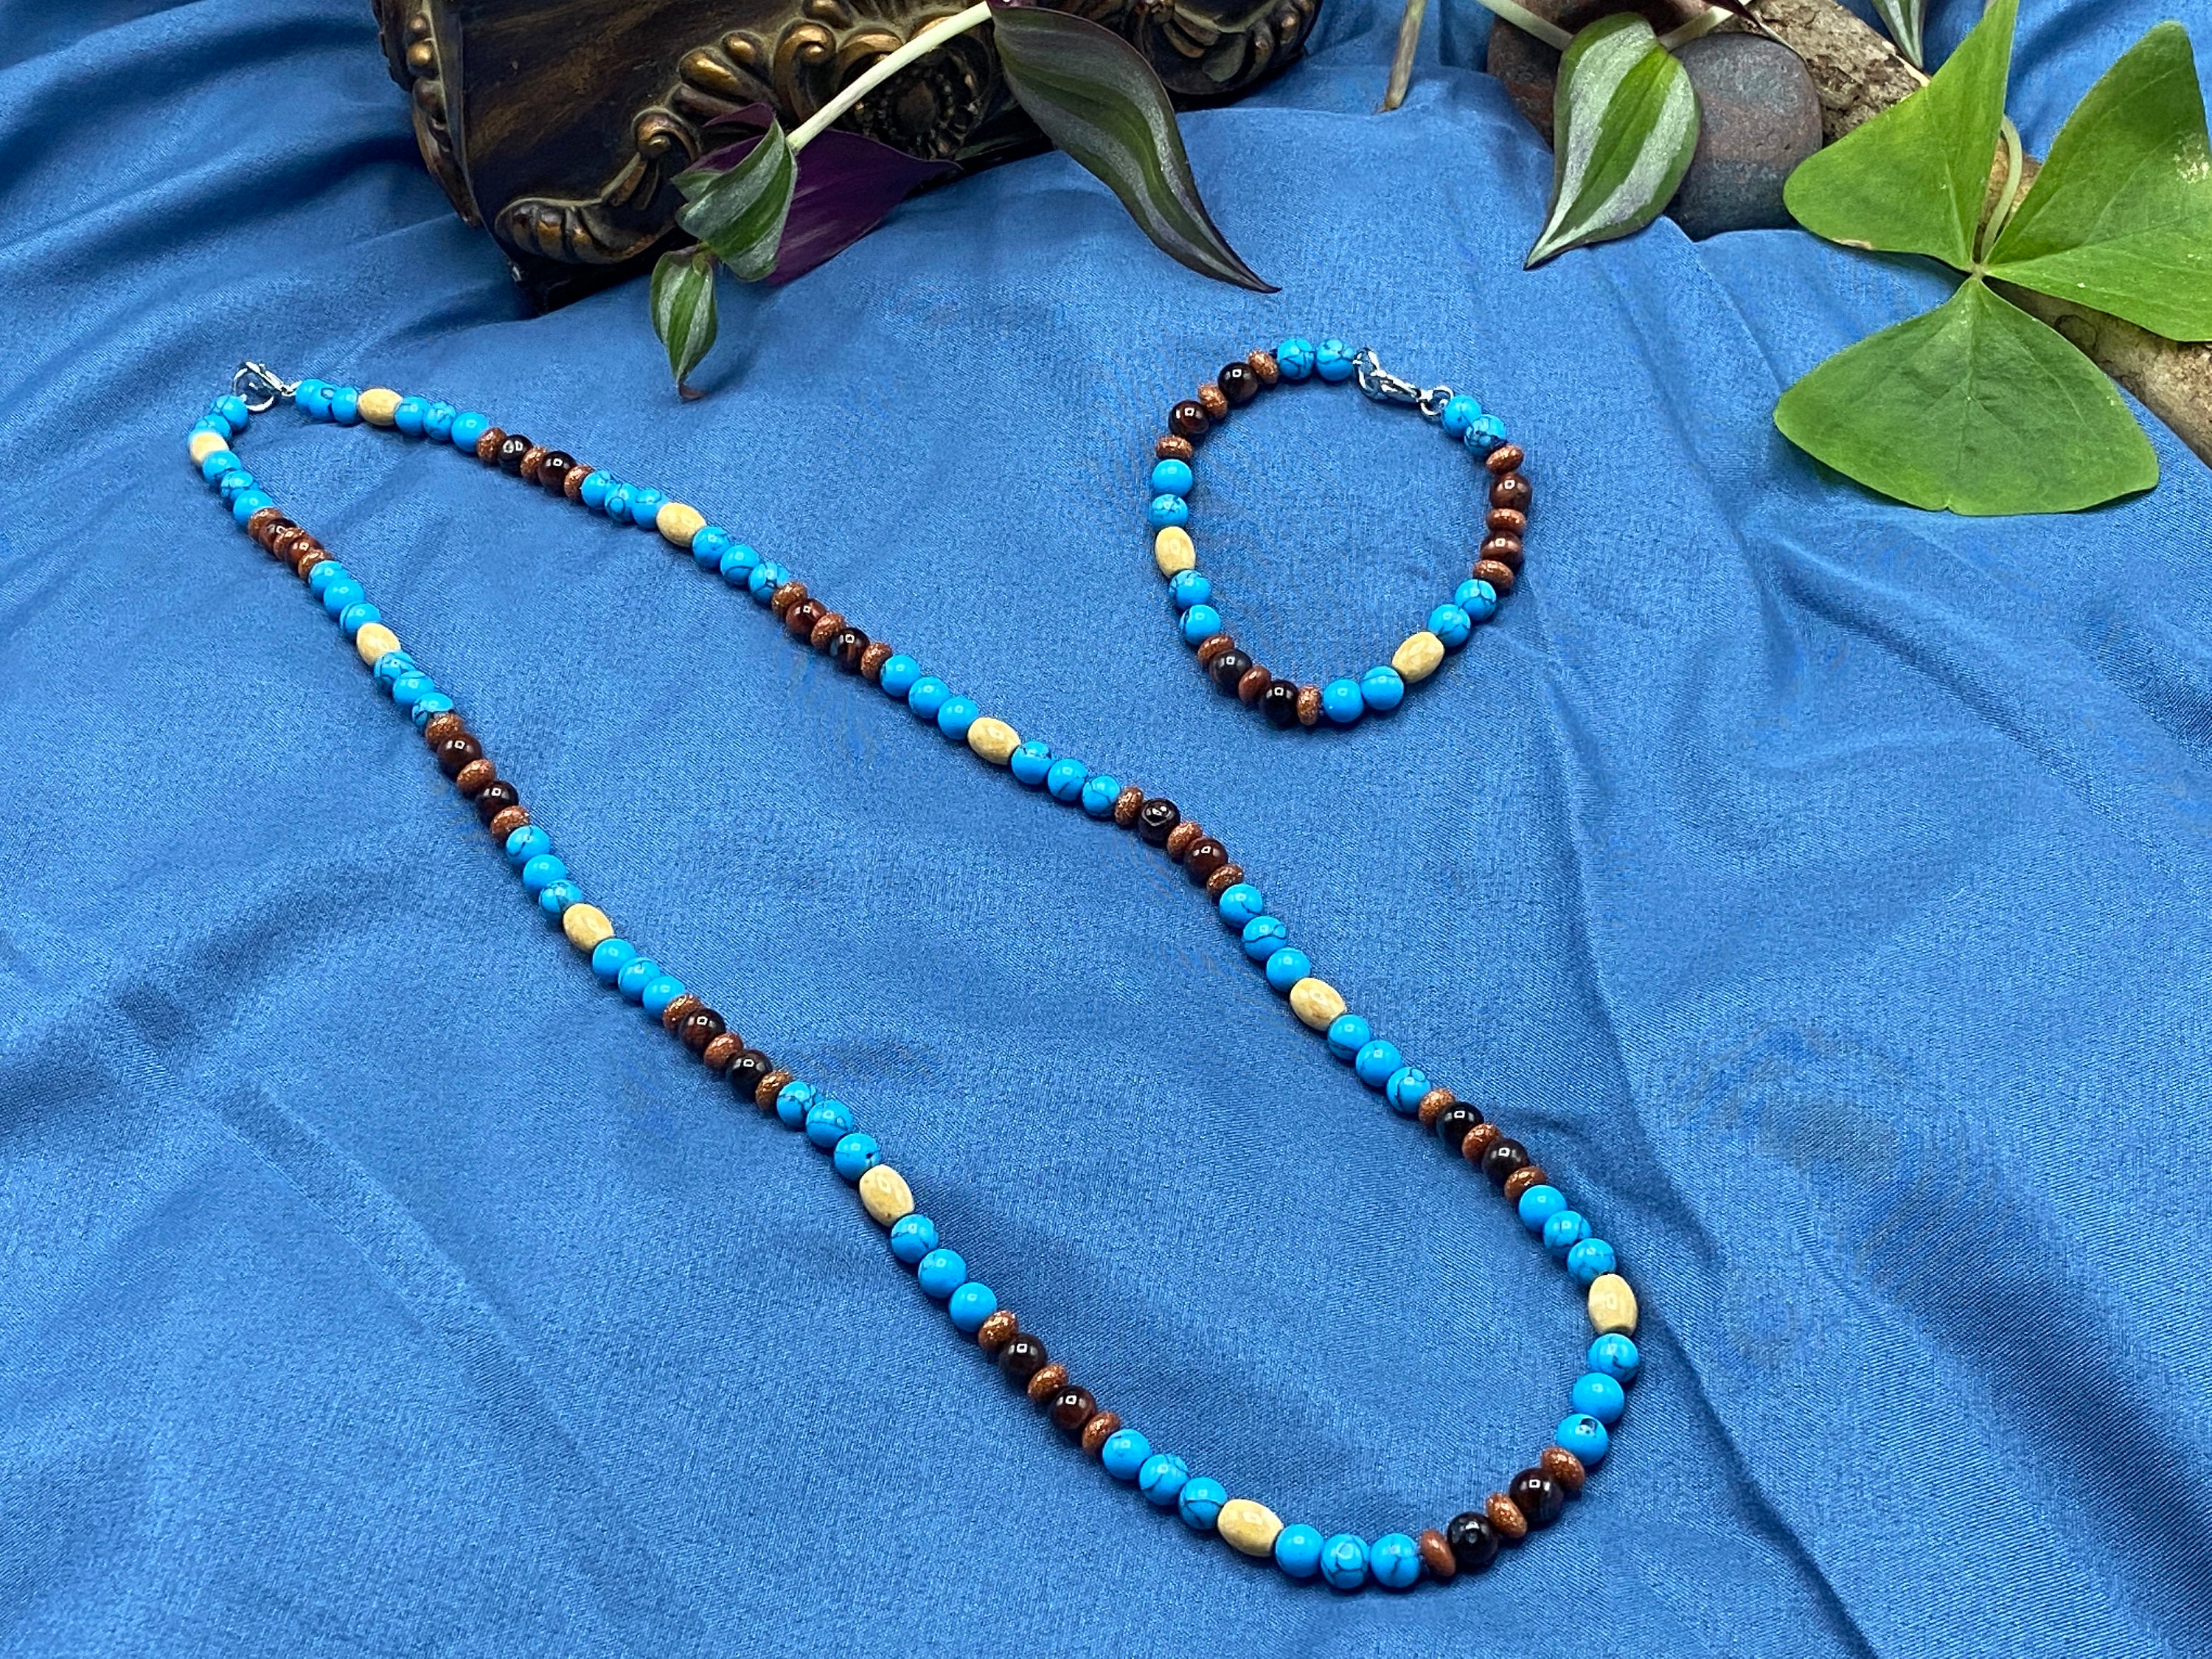 Chakra Jewelry "Shaman's Path" Necklace & Bracelet | Turquoise Red Tigereye Goldstone | Indigenous Powwow Meditation Shamanic Energy Healing - Mama’s Malas jewelry